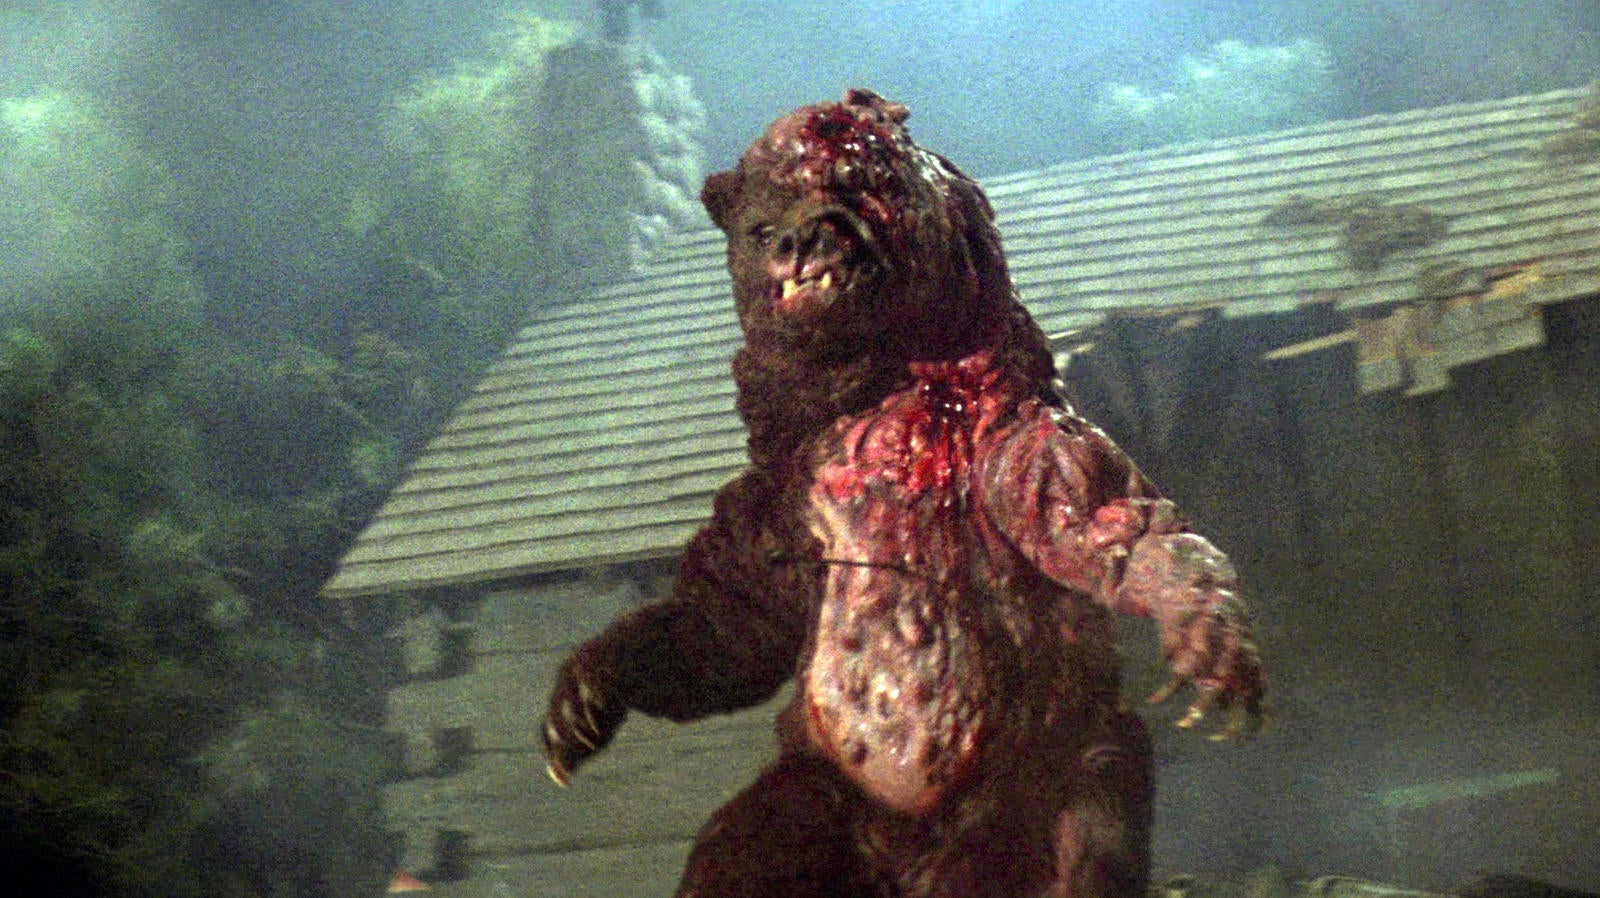 prophecy-movie-1979-bear-monster.jpg